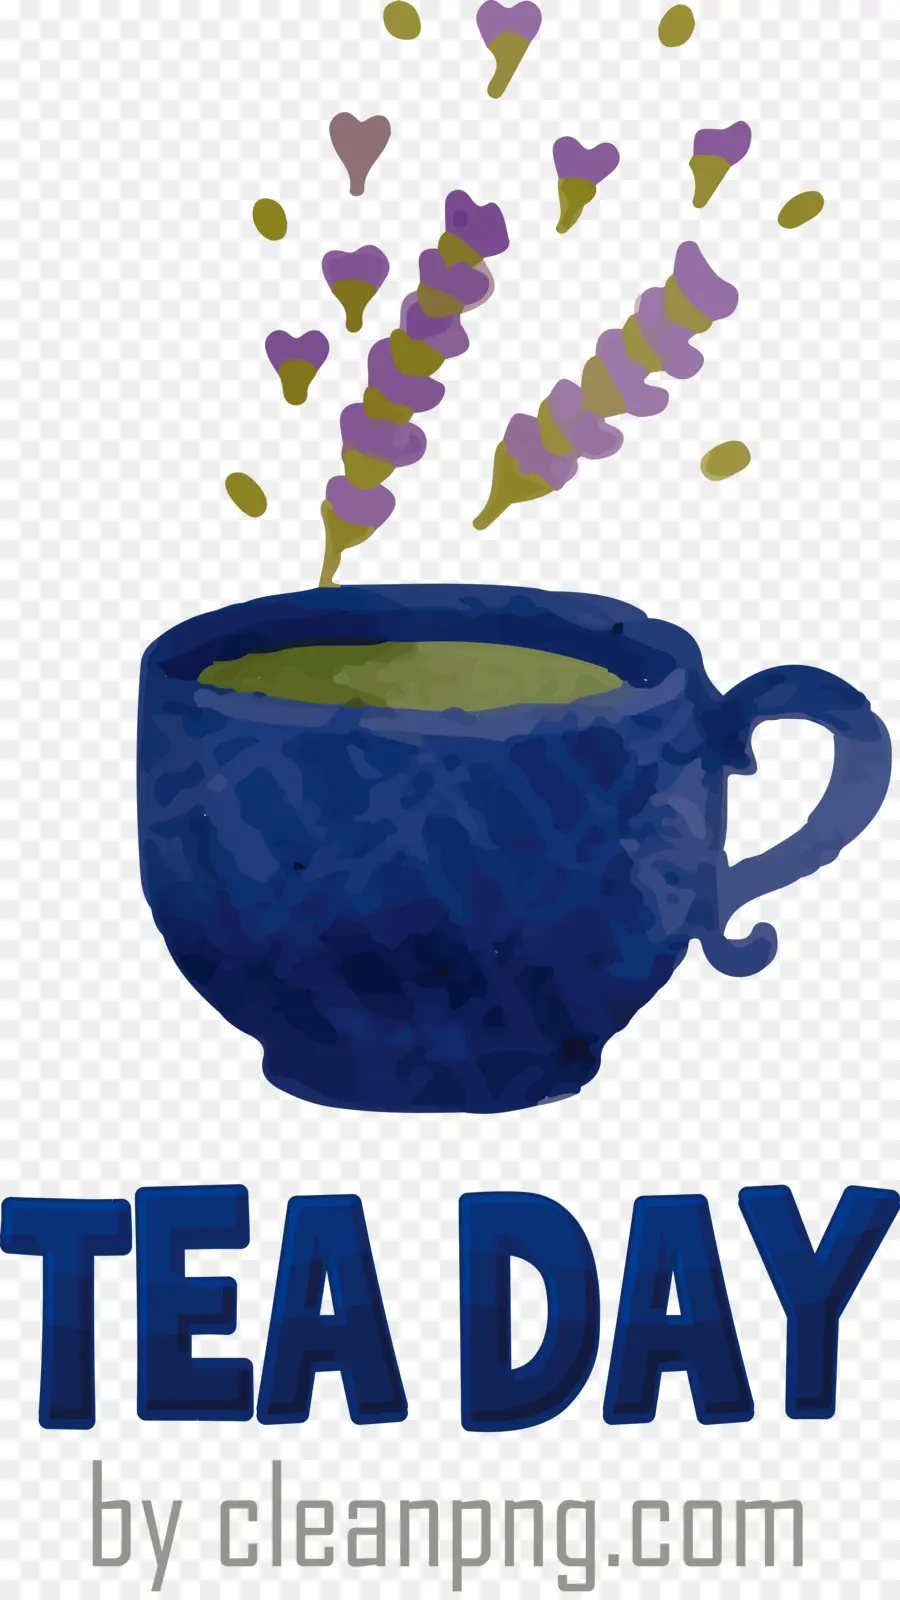 Tea Day International Tea Day - 